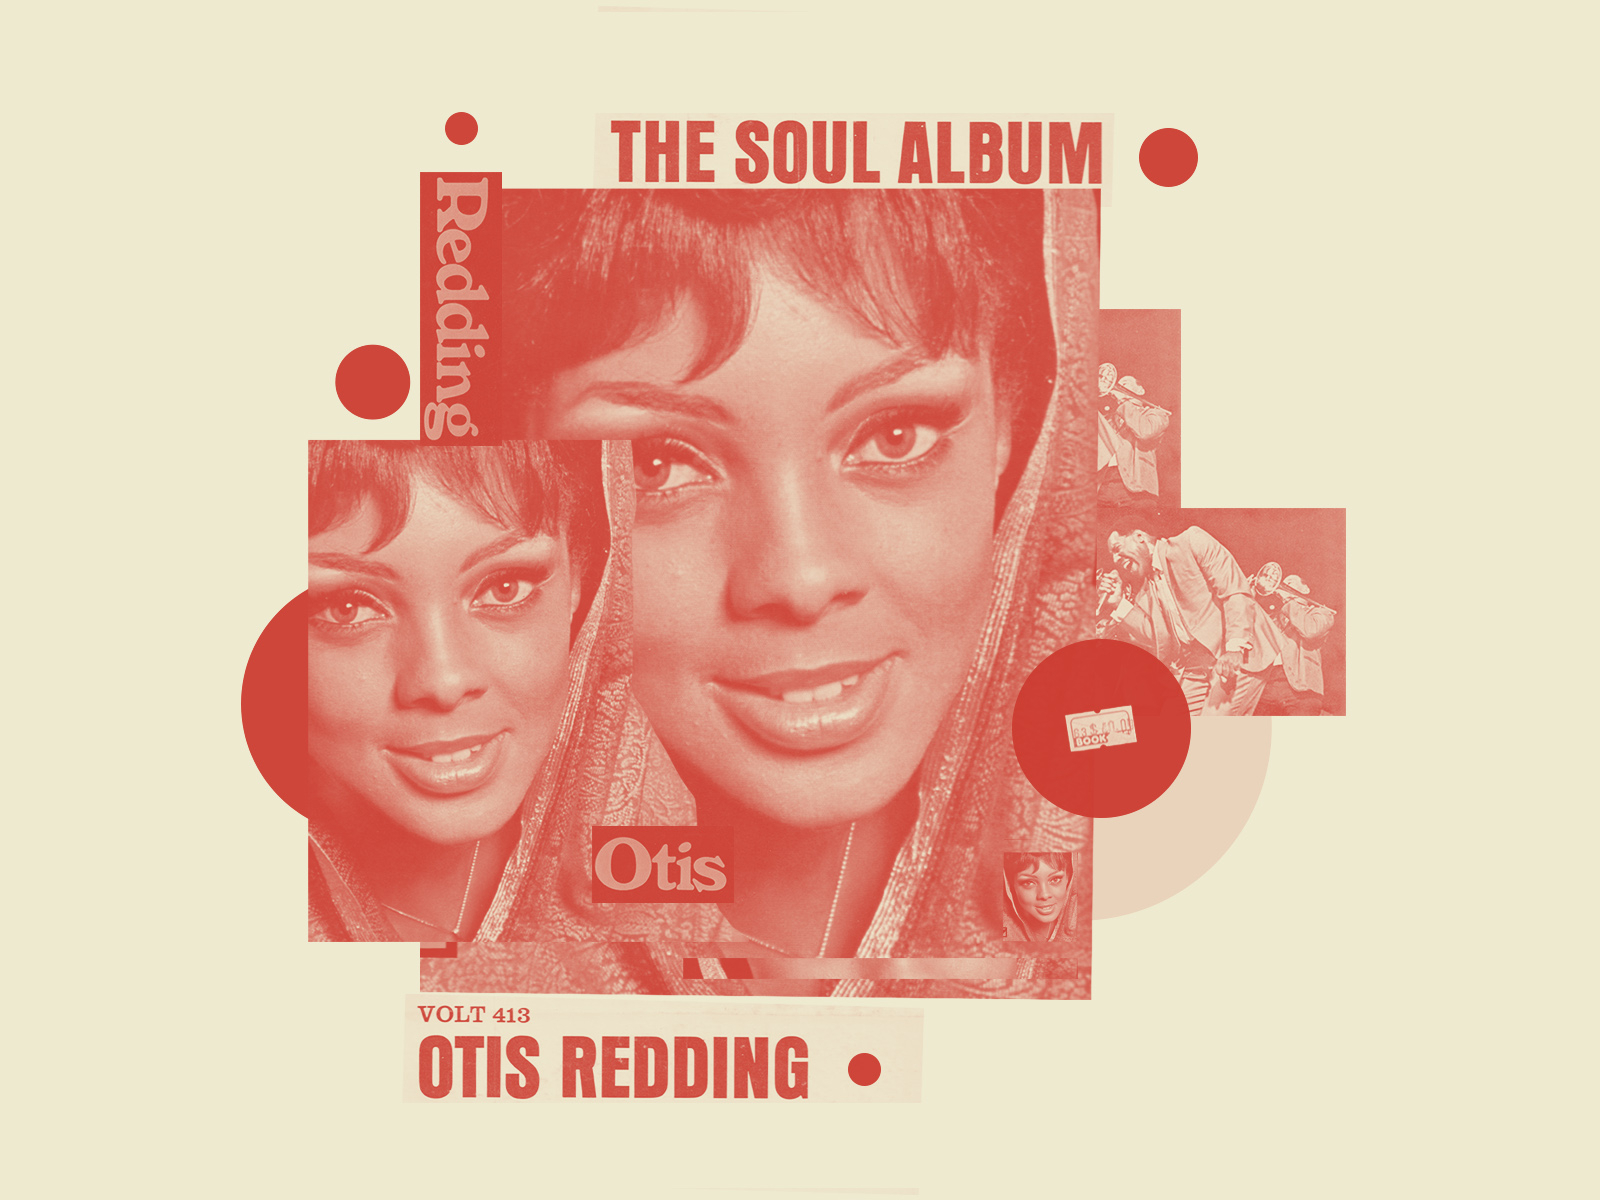 Re:Record 036: Otis Redding "The Soul Album" - 1966 by Mack Haning on Dribbble